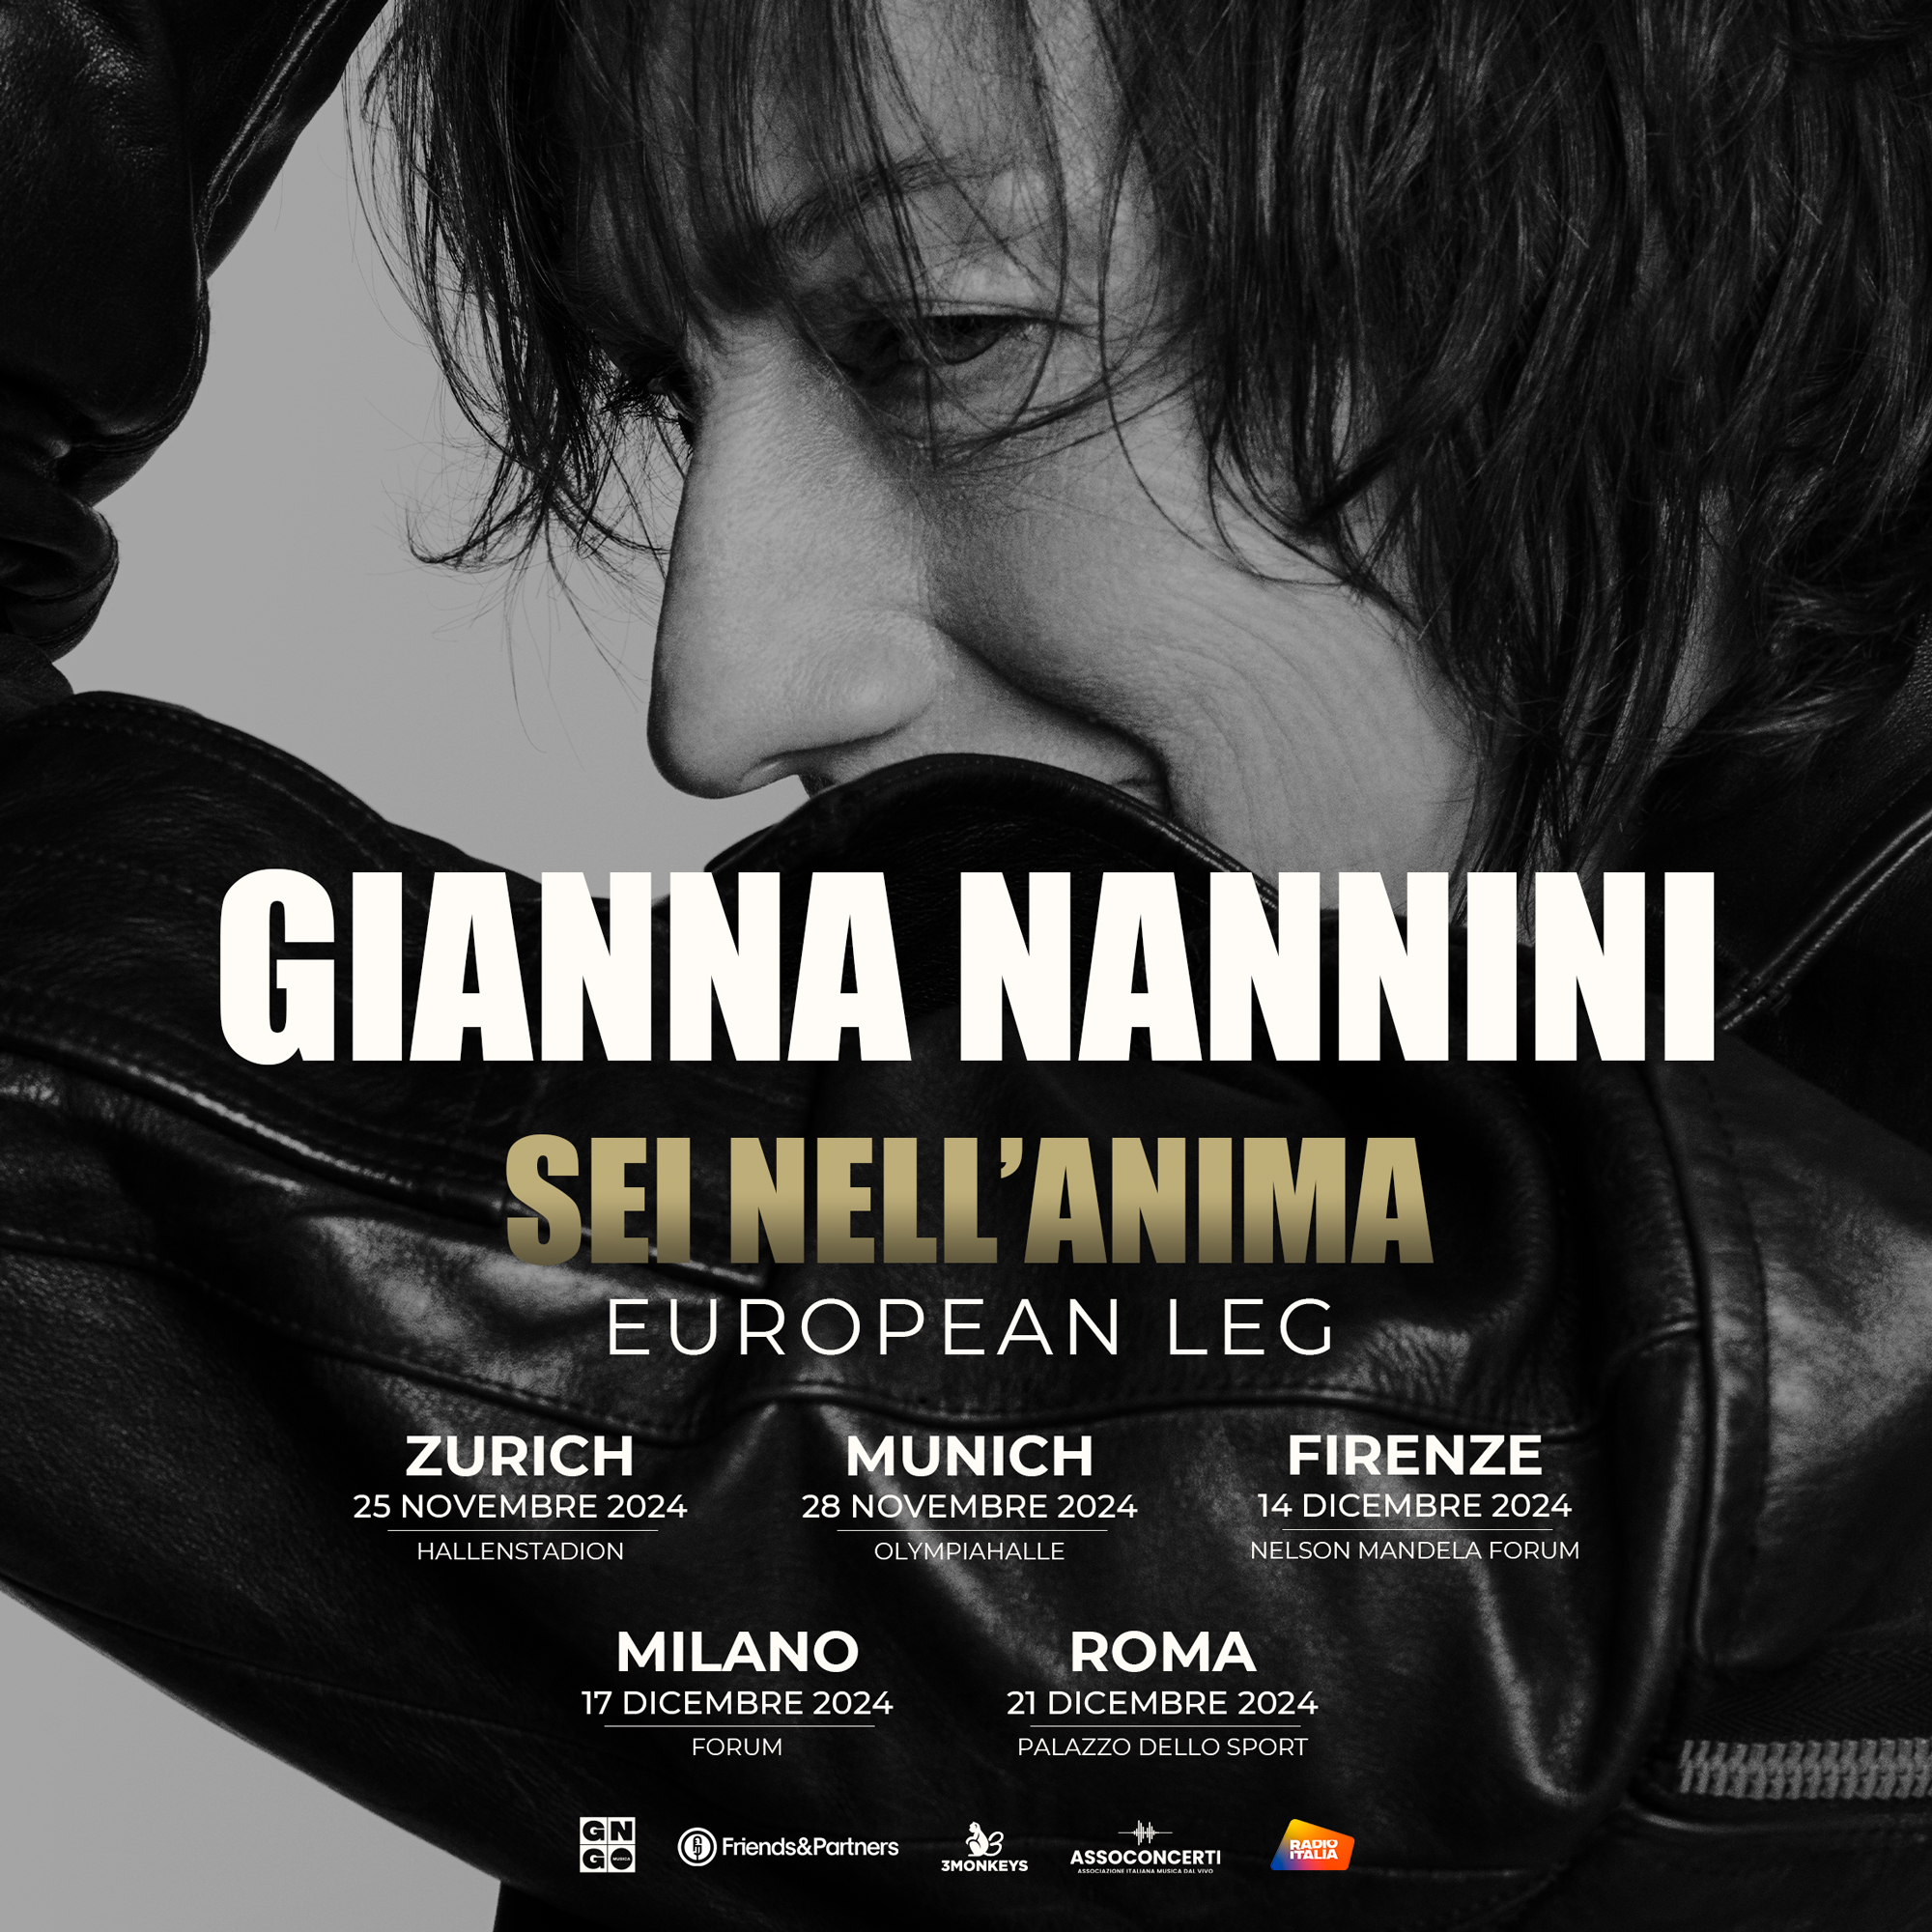 Gianna Nannini - Sei Nell'anima in der Uber Eats Music Hall Tickets